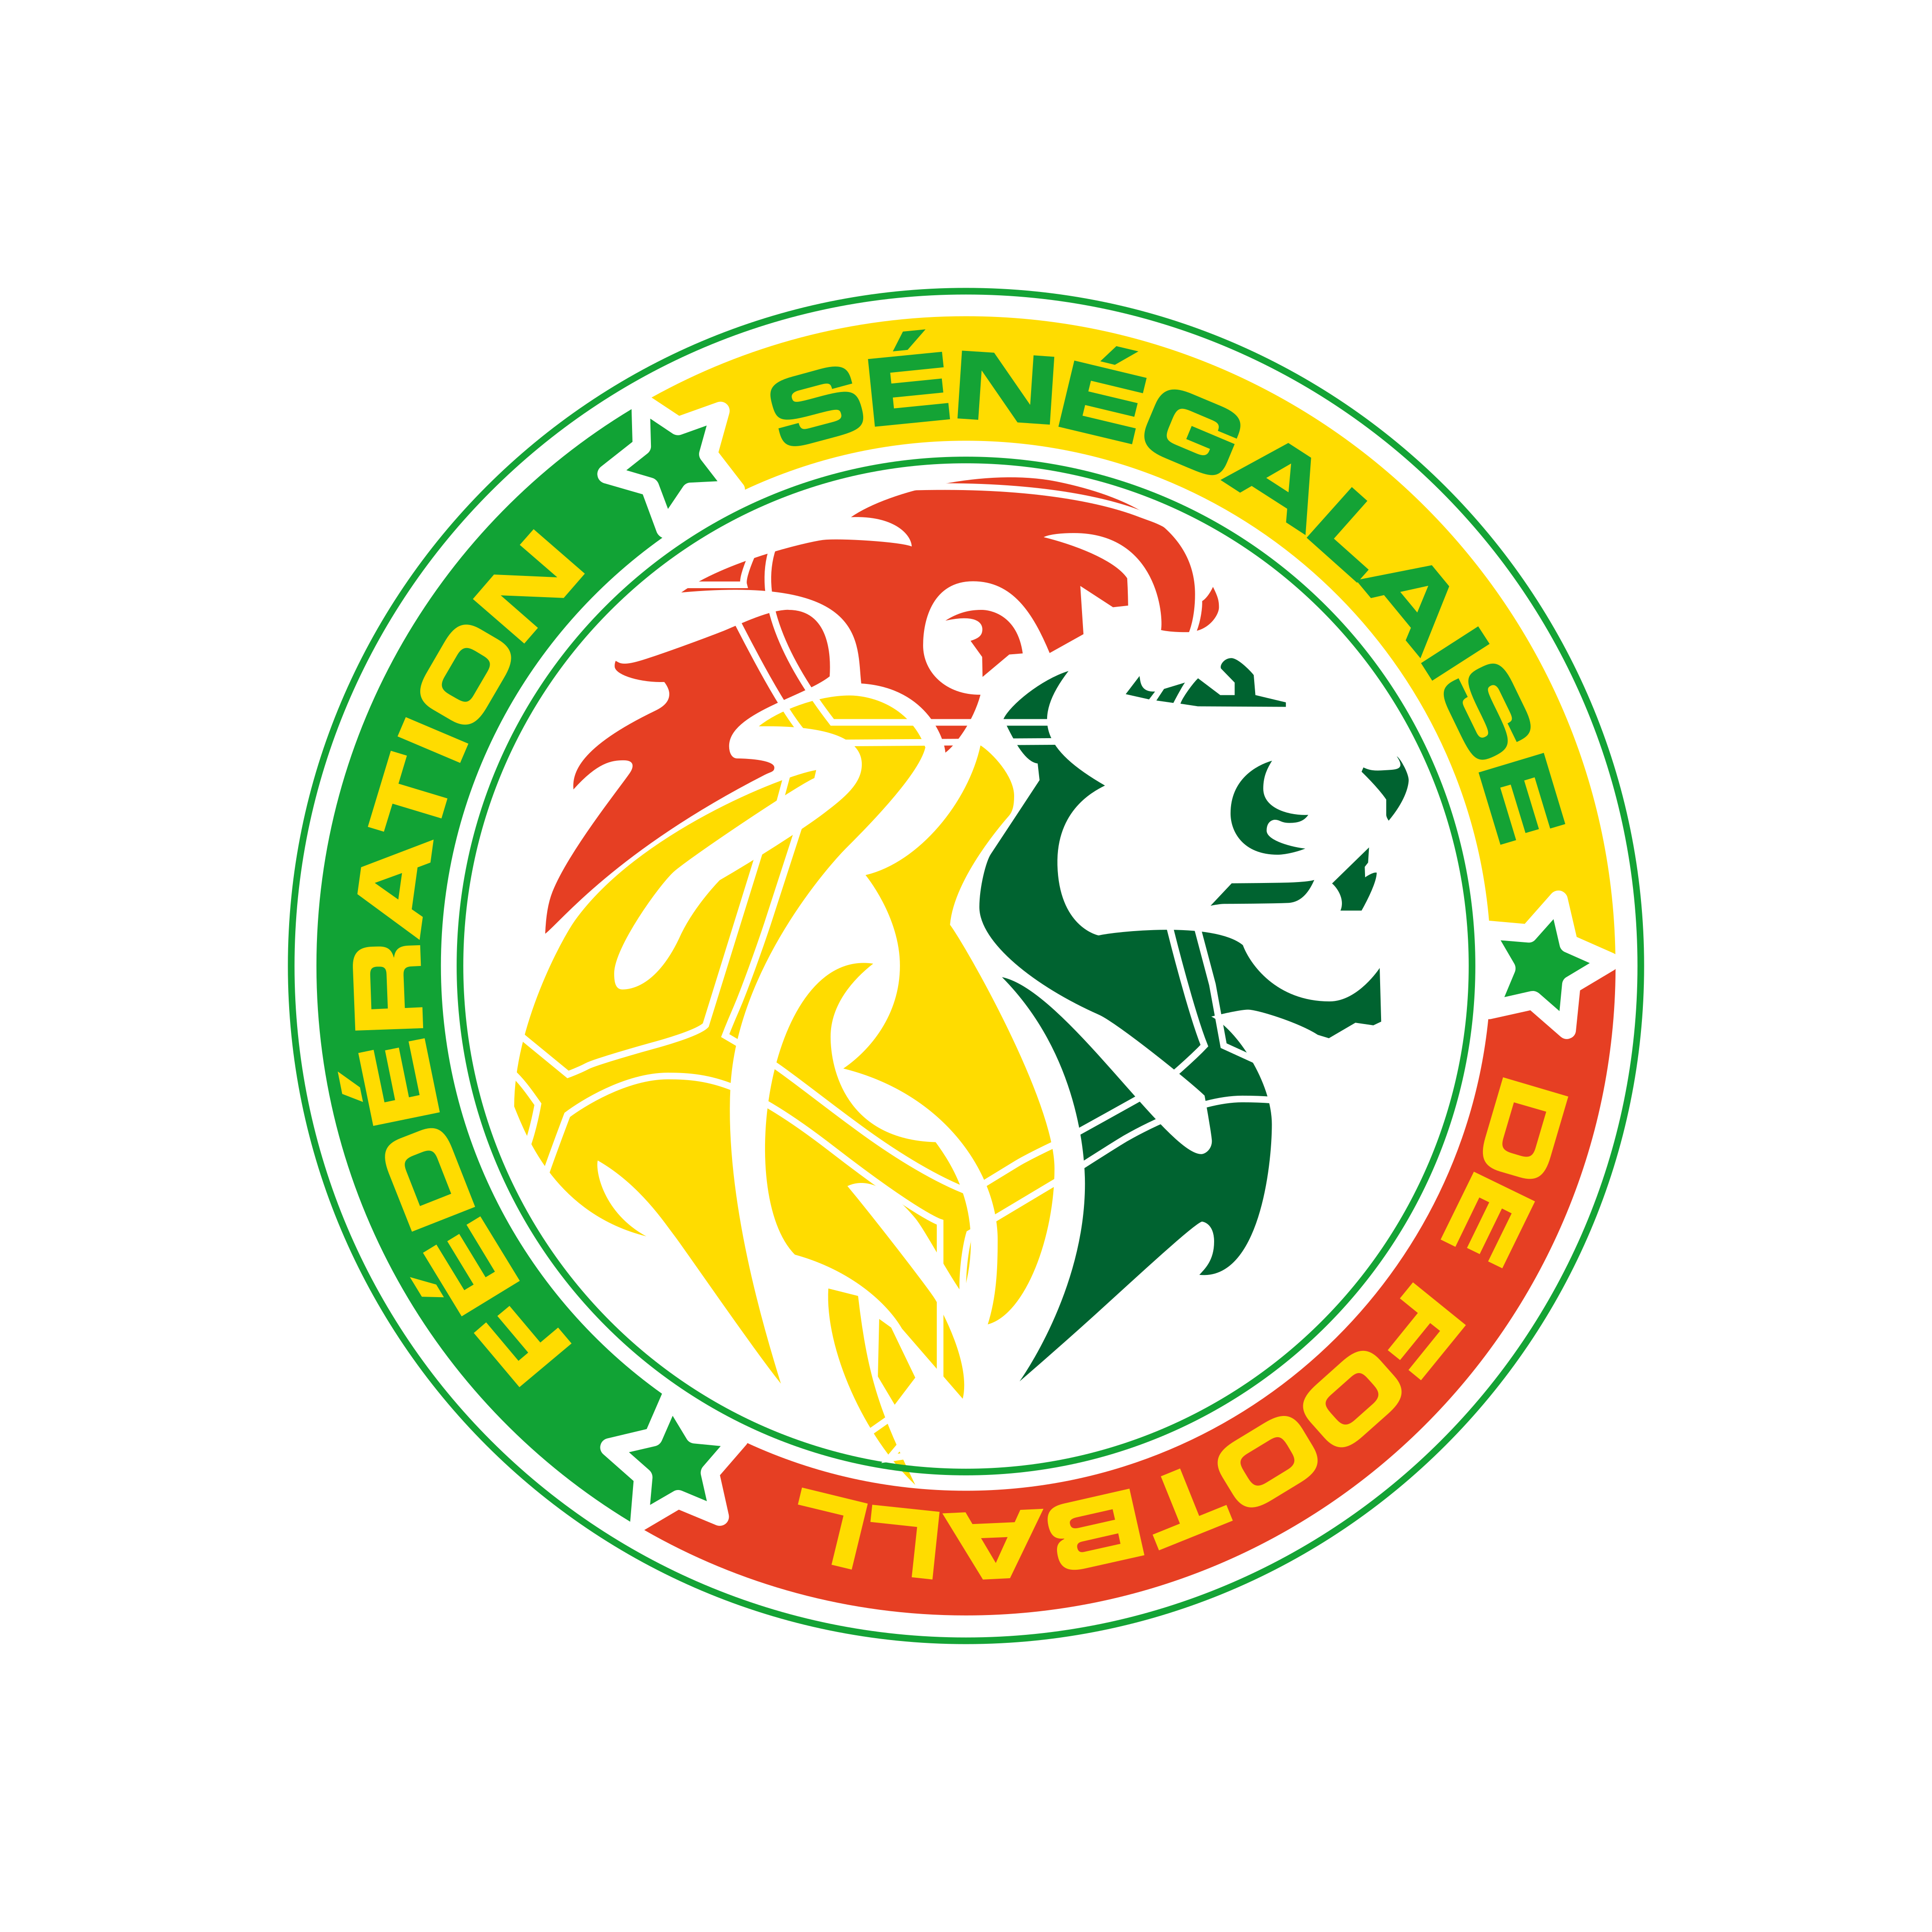 fsf senegal national football team logo 0 - FSF Logo - Senegal National Football Team Logo